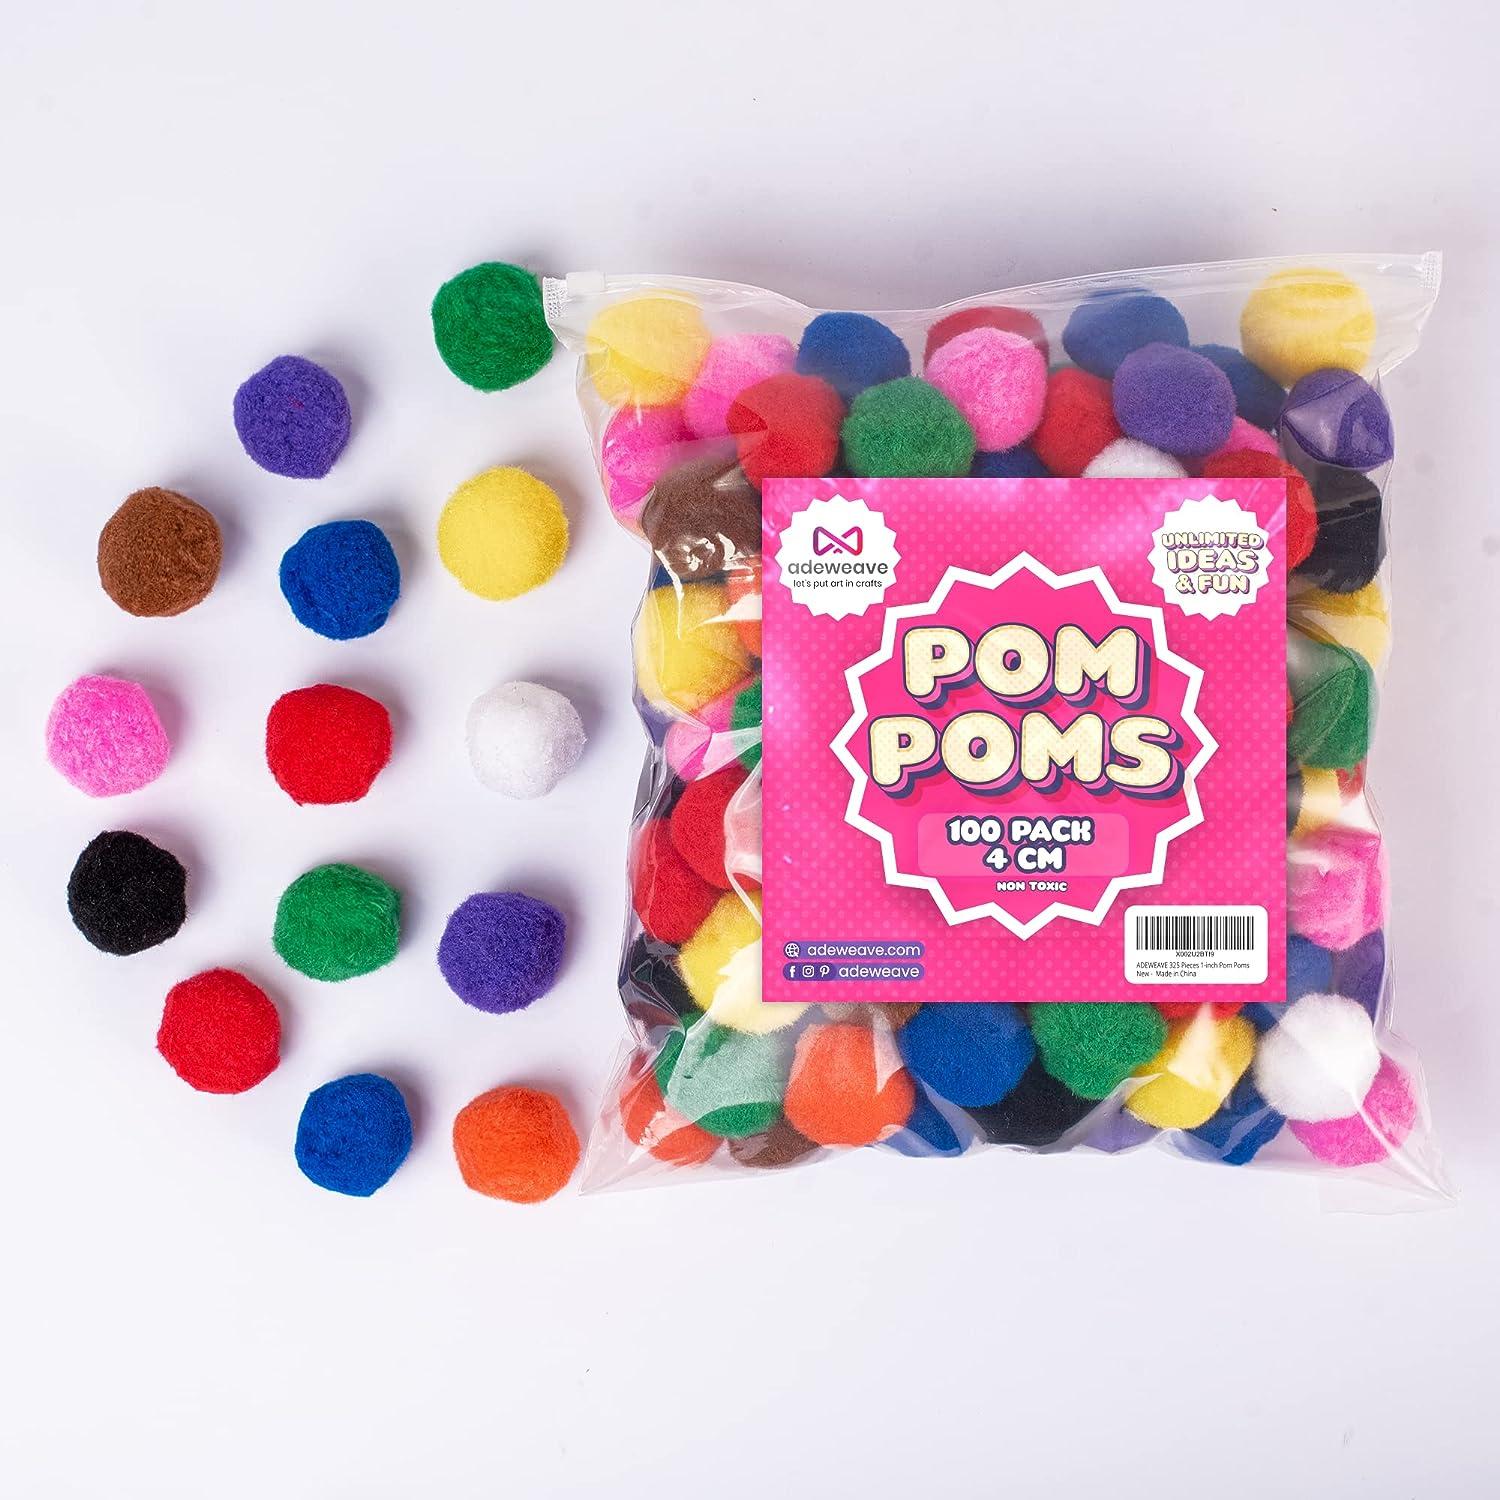 Pacon® Creativity Street® 1” Glitter Pom Poms Assortment, 3 Pack Bundle